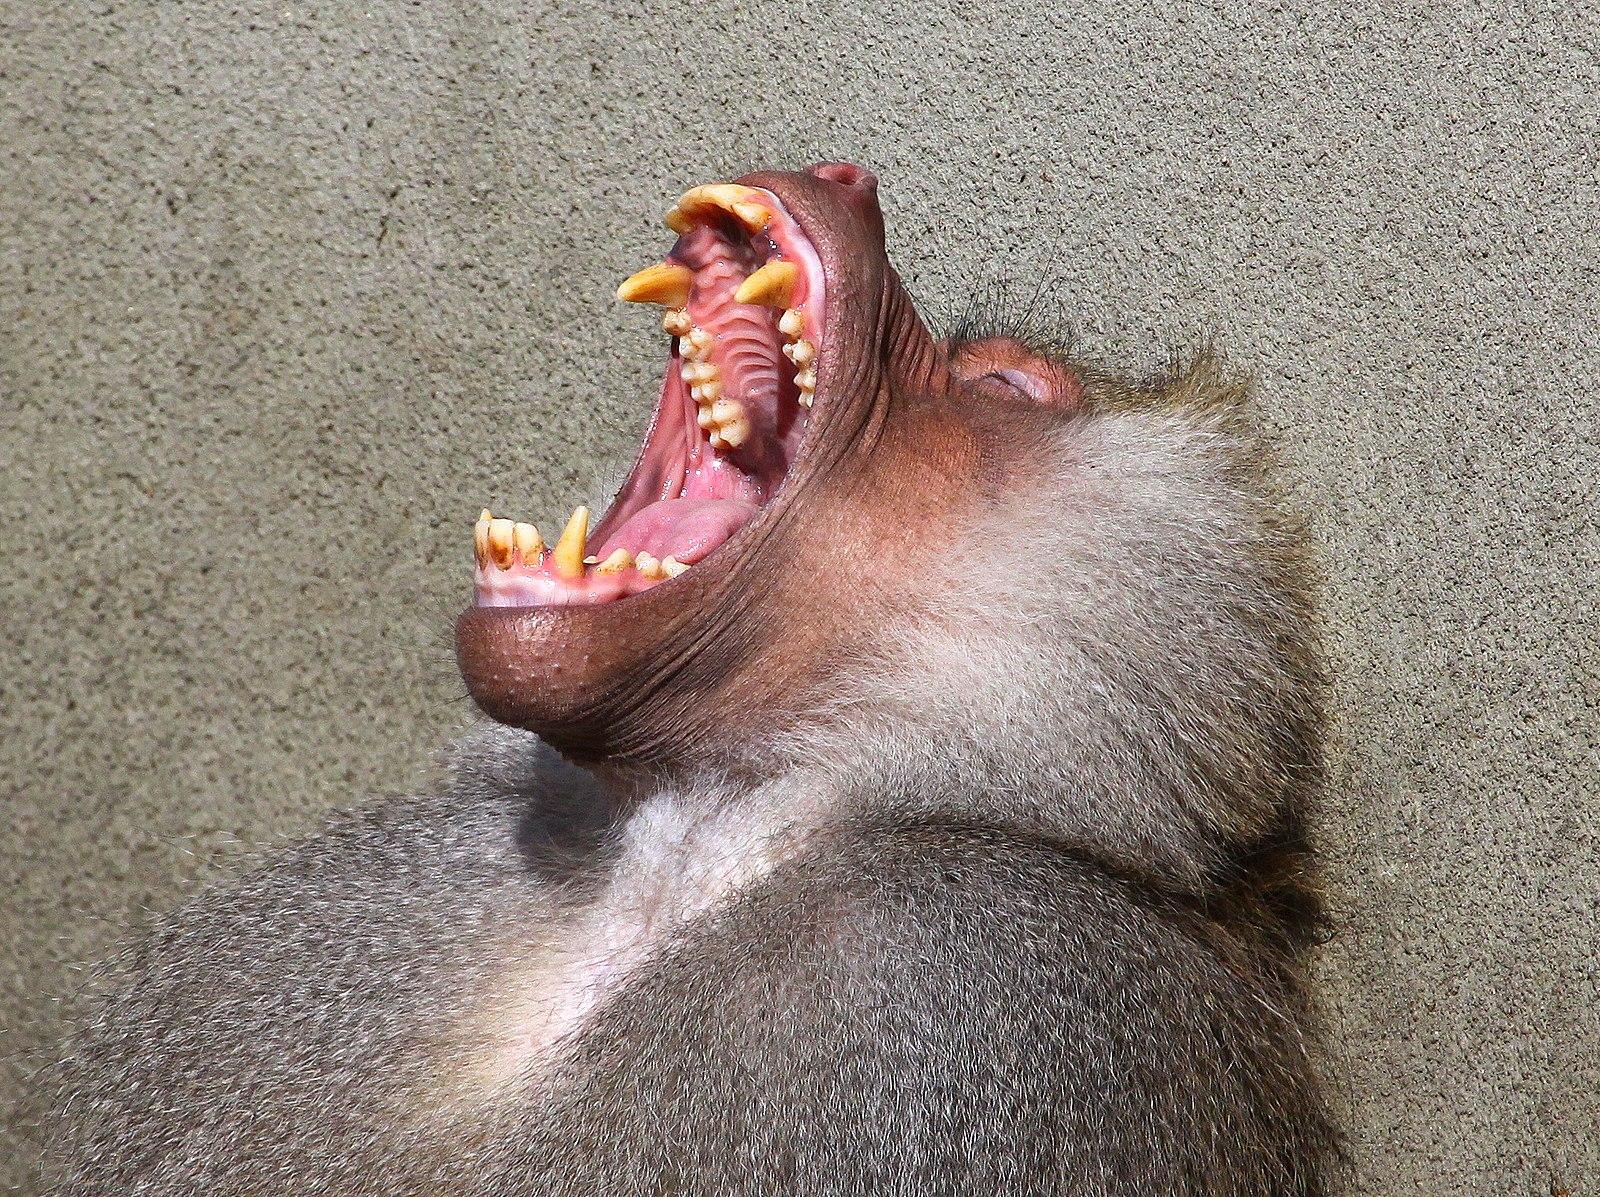 Yawning baboon with large teeth.